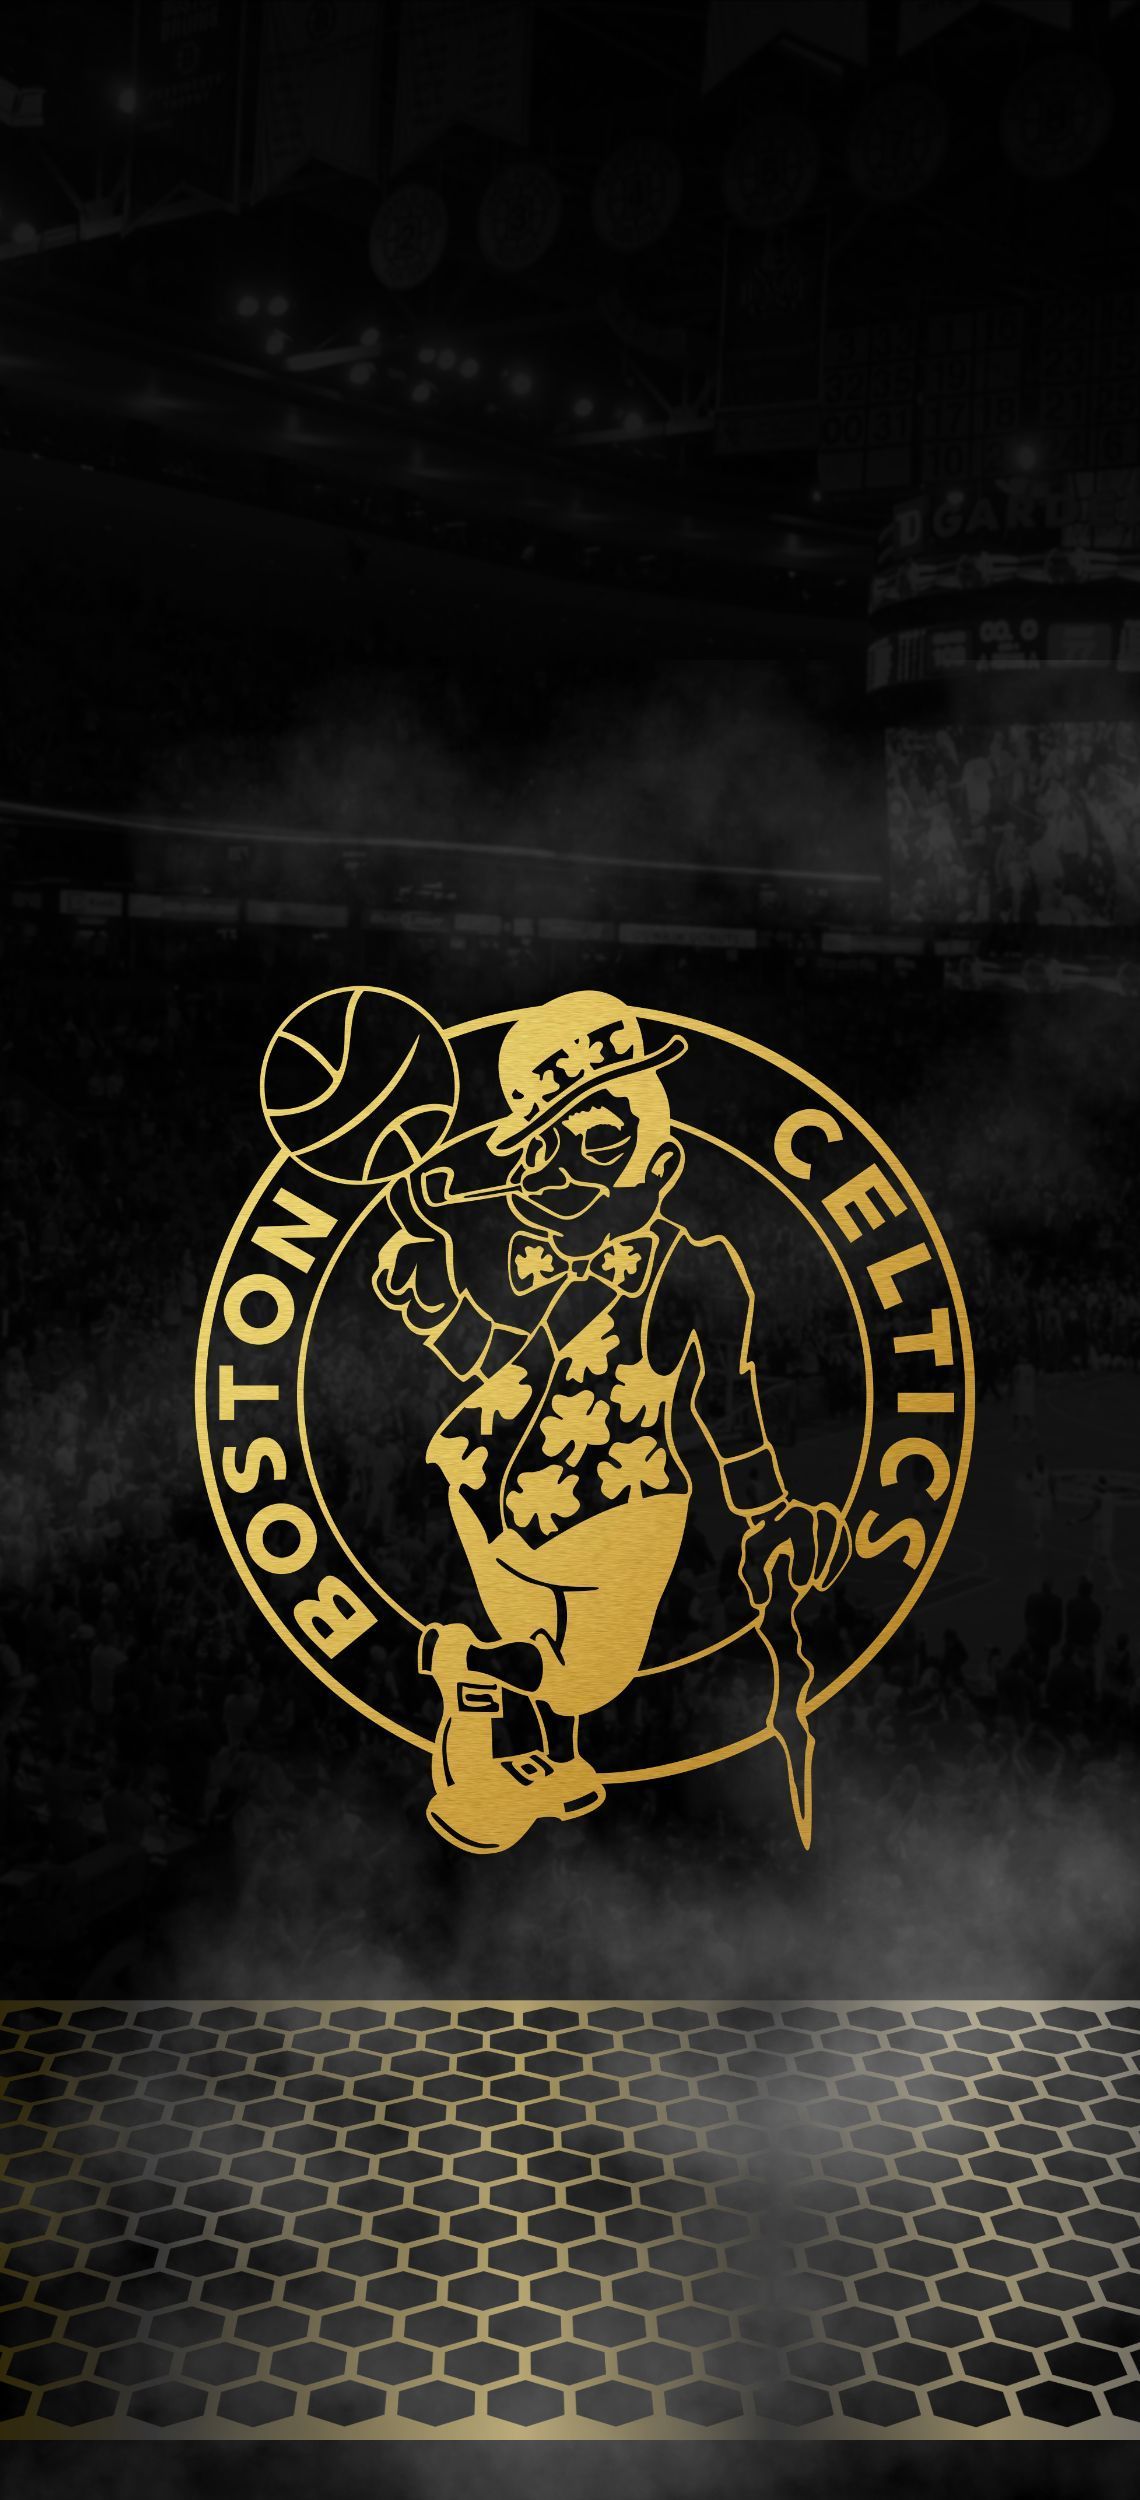 Boston Celtics iPhone Wallpaper Free Boston Celtics iPhone Background